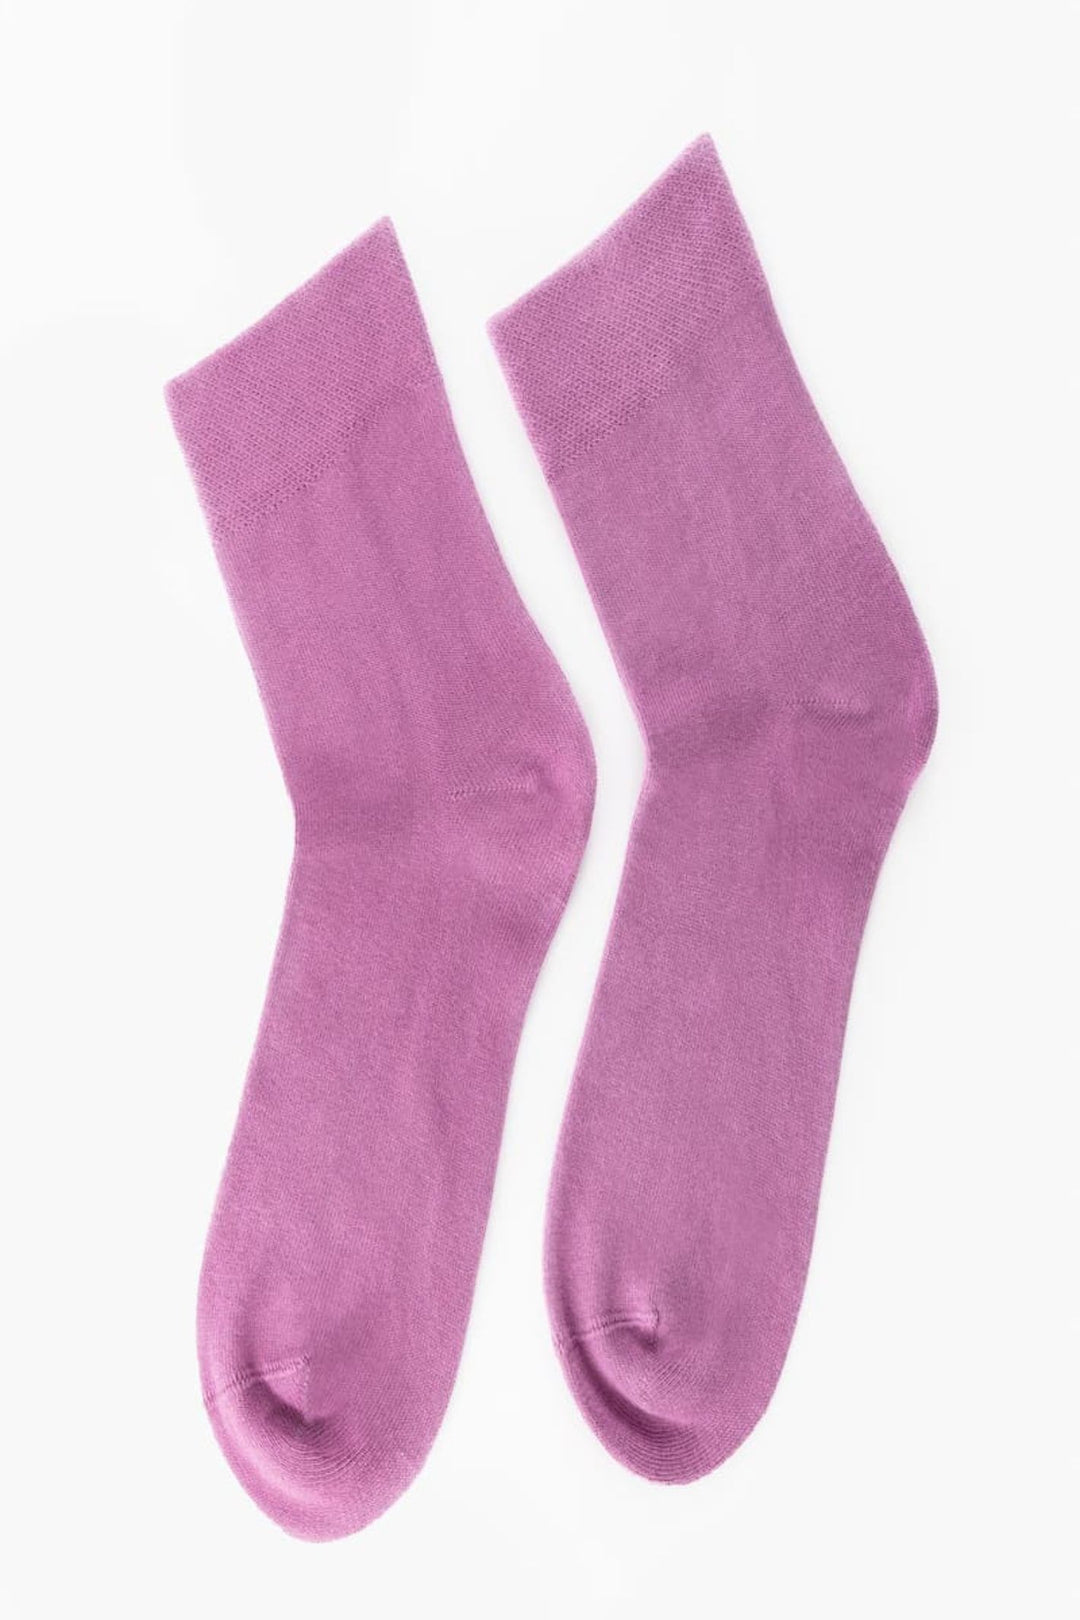 Dusky Pink Ankle Length Super Soft Bamboo Socks